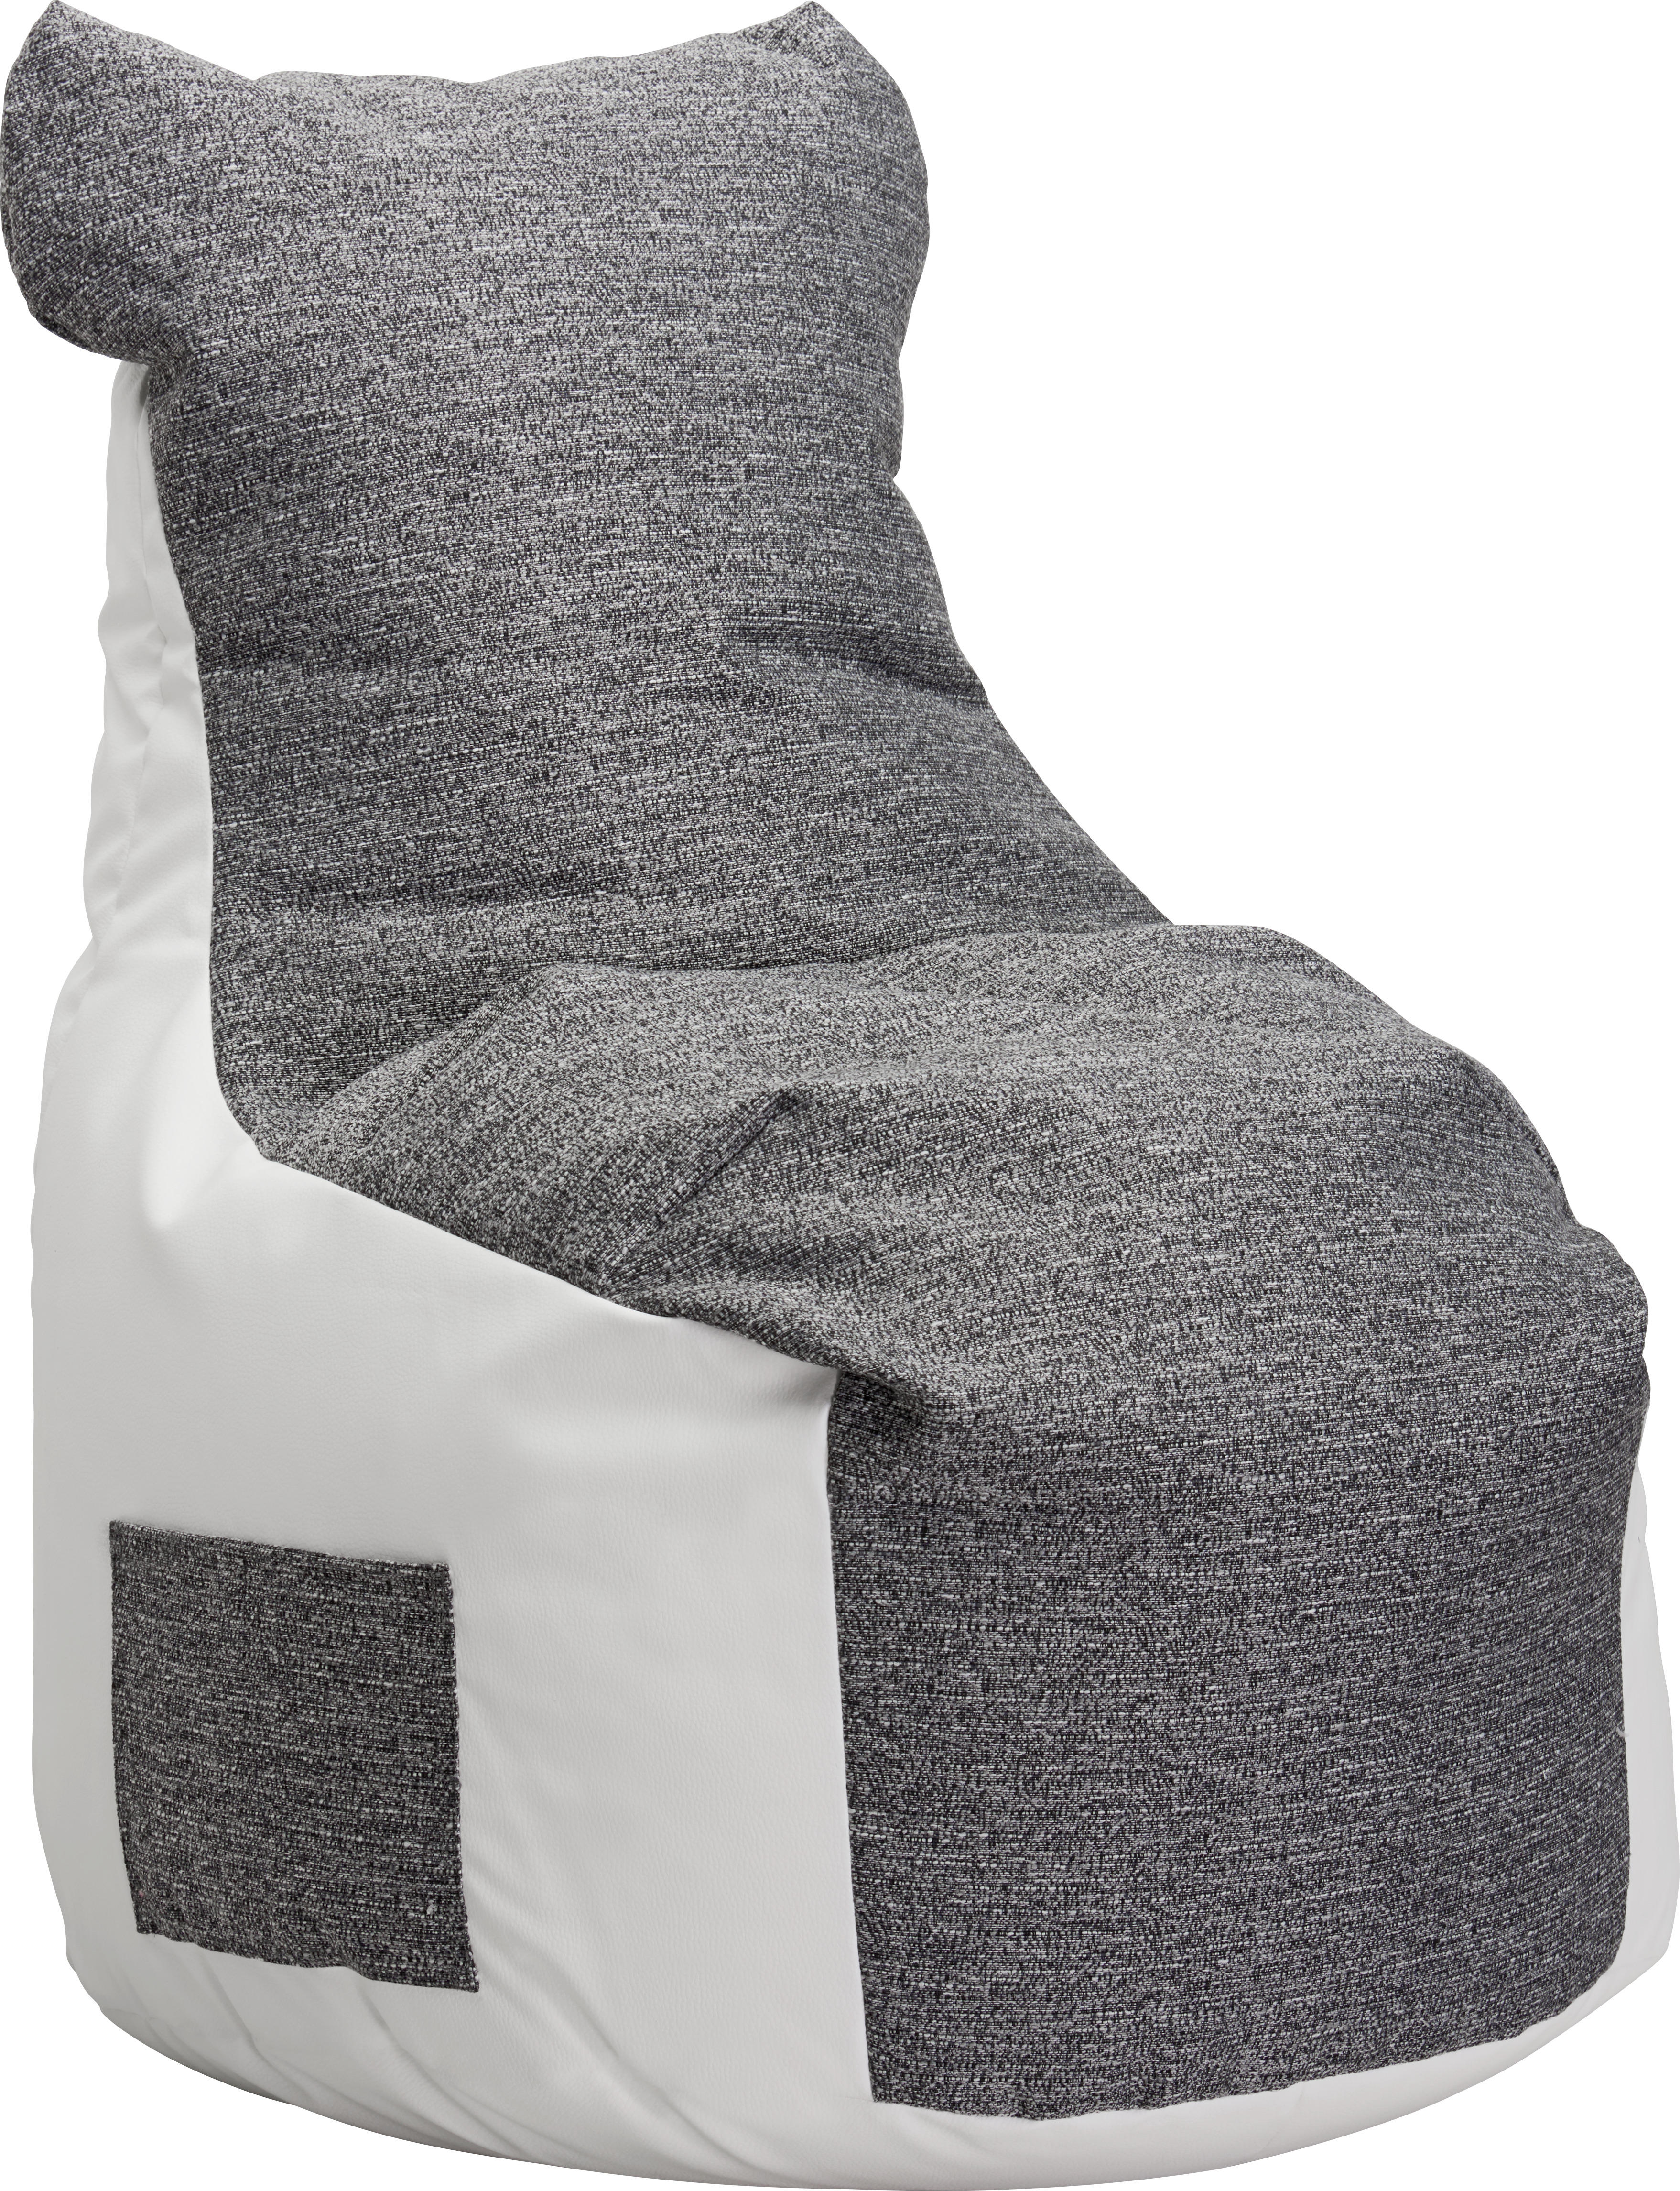 SEDACÍ PYTEL, šedá, bílá - šedá/bílá, Design, textil (85/100/85cm) - Boxxx